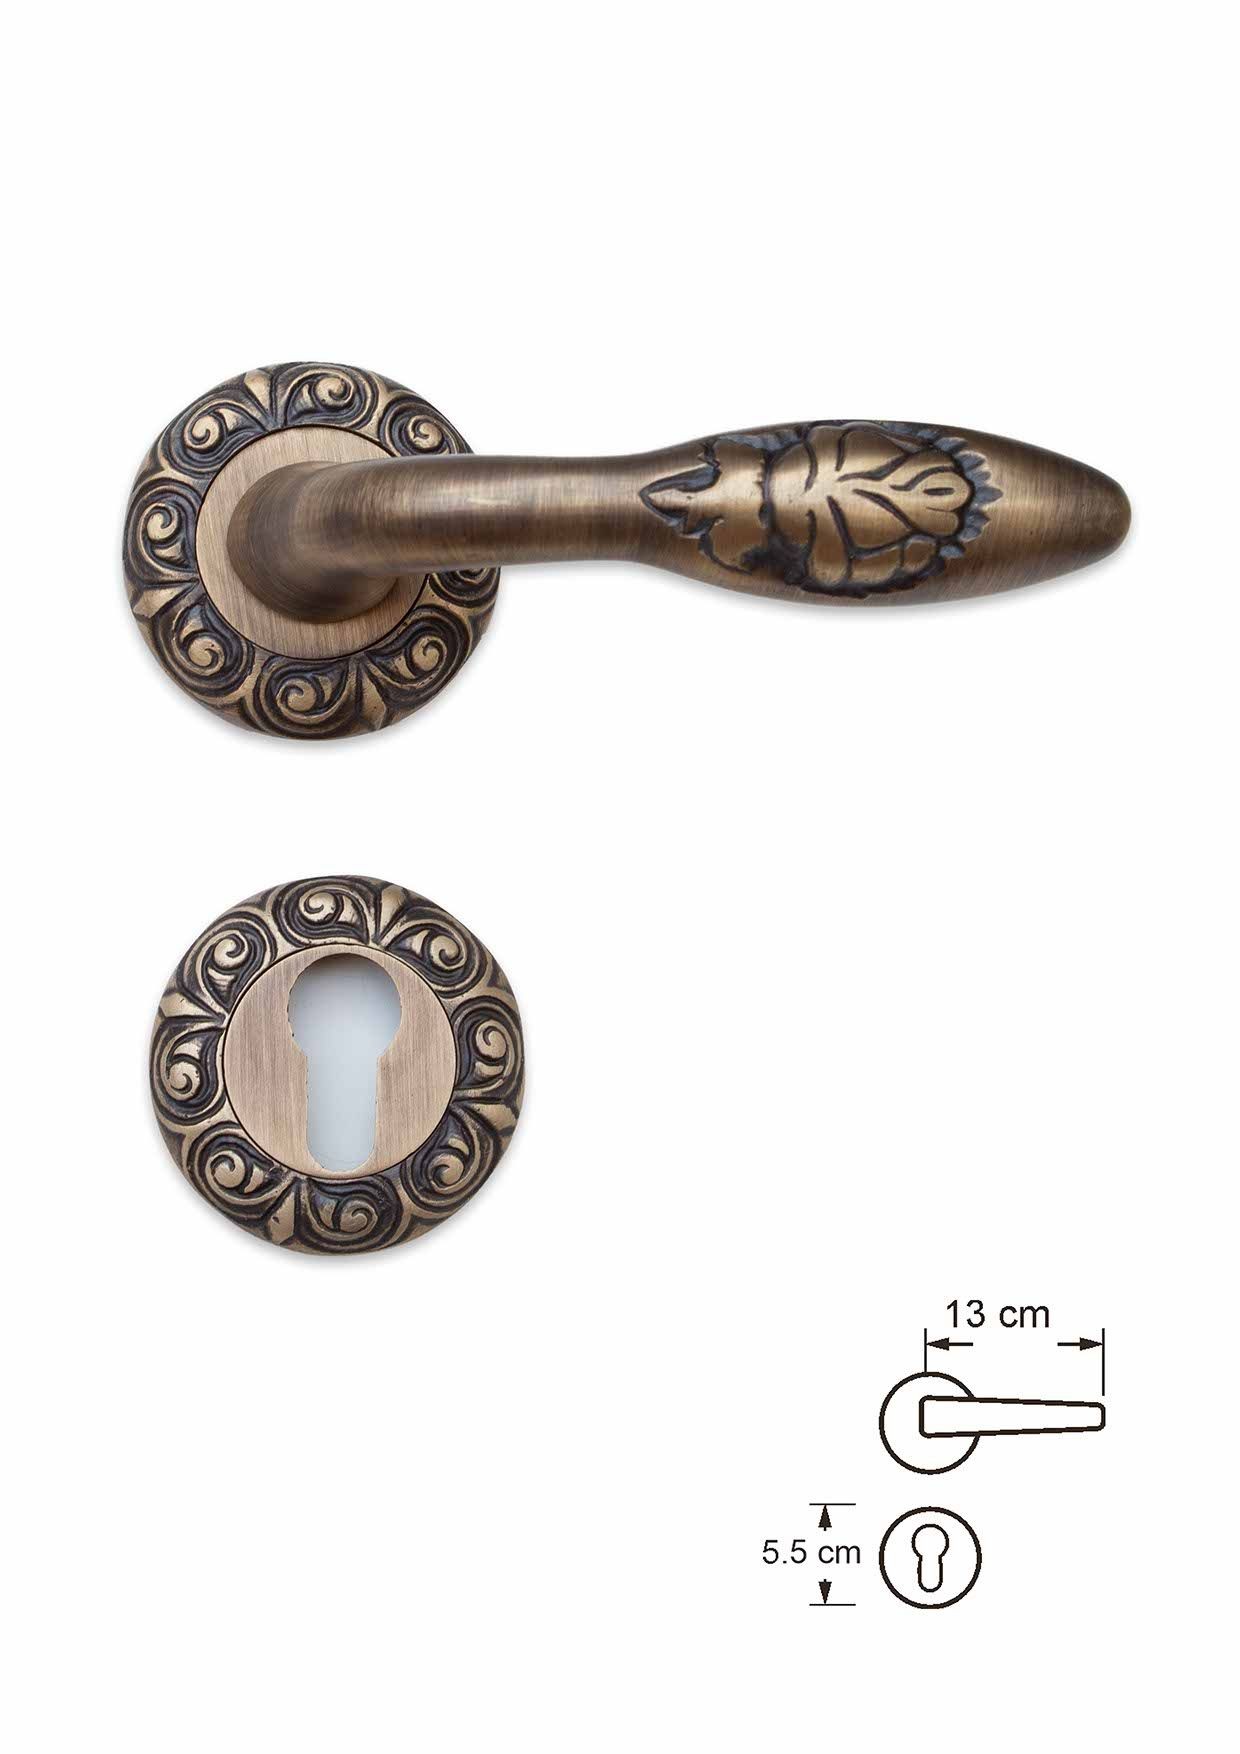 Custom Brass Lever Rose Handles: Exquisite Craftsmanship for Elegant Door Hardware